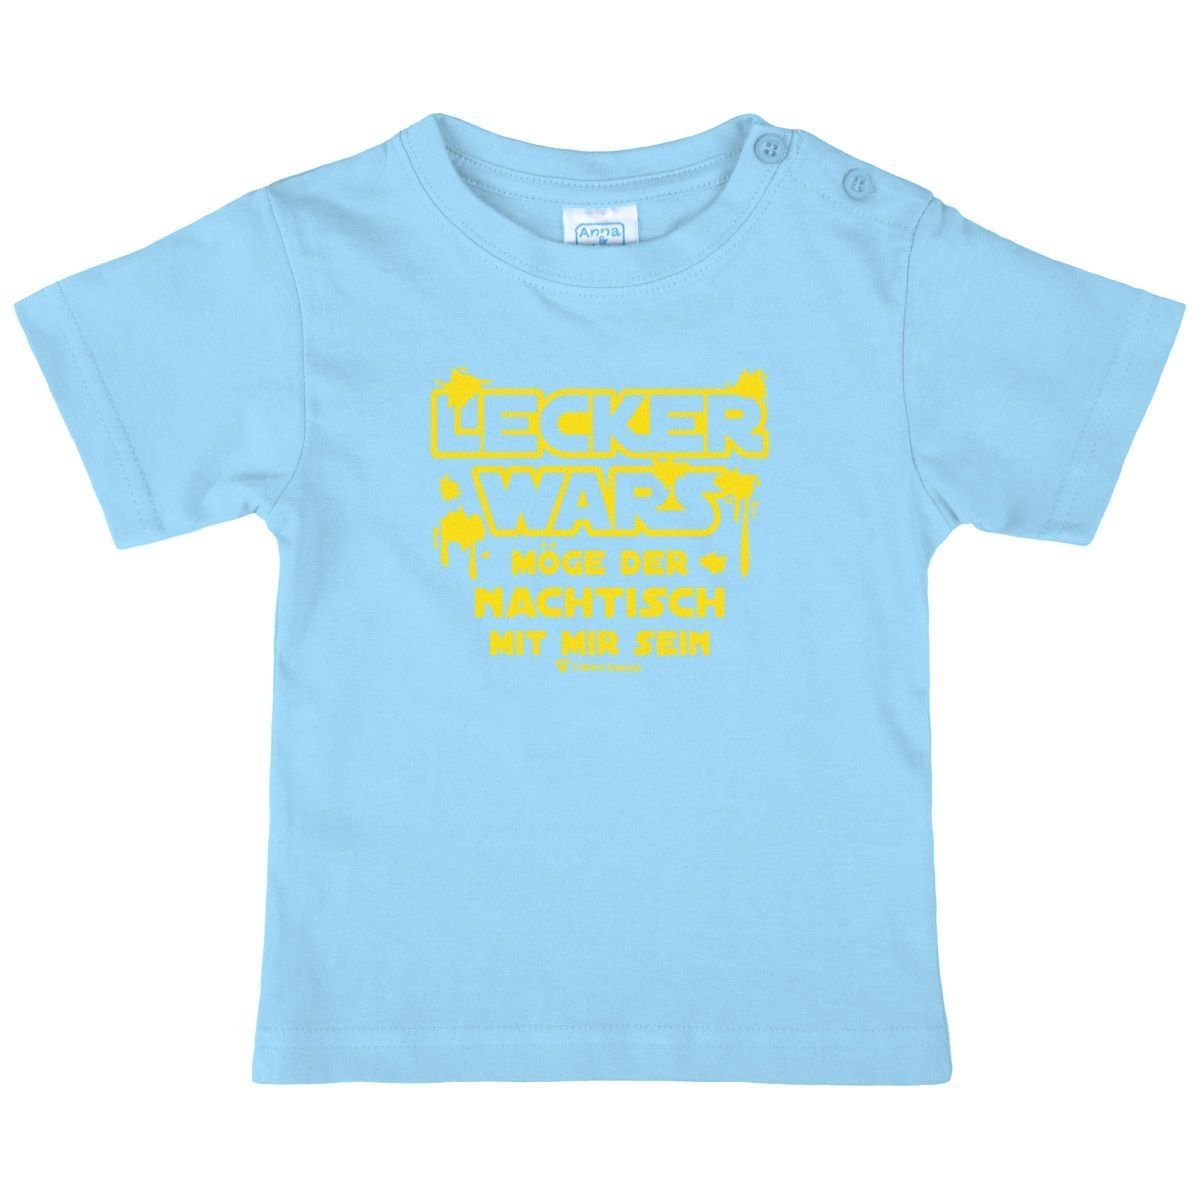 Lecker wars Kinder T-Shirt hellblau 68 / 74